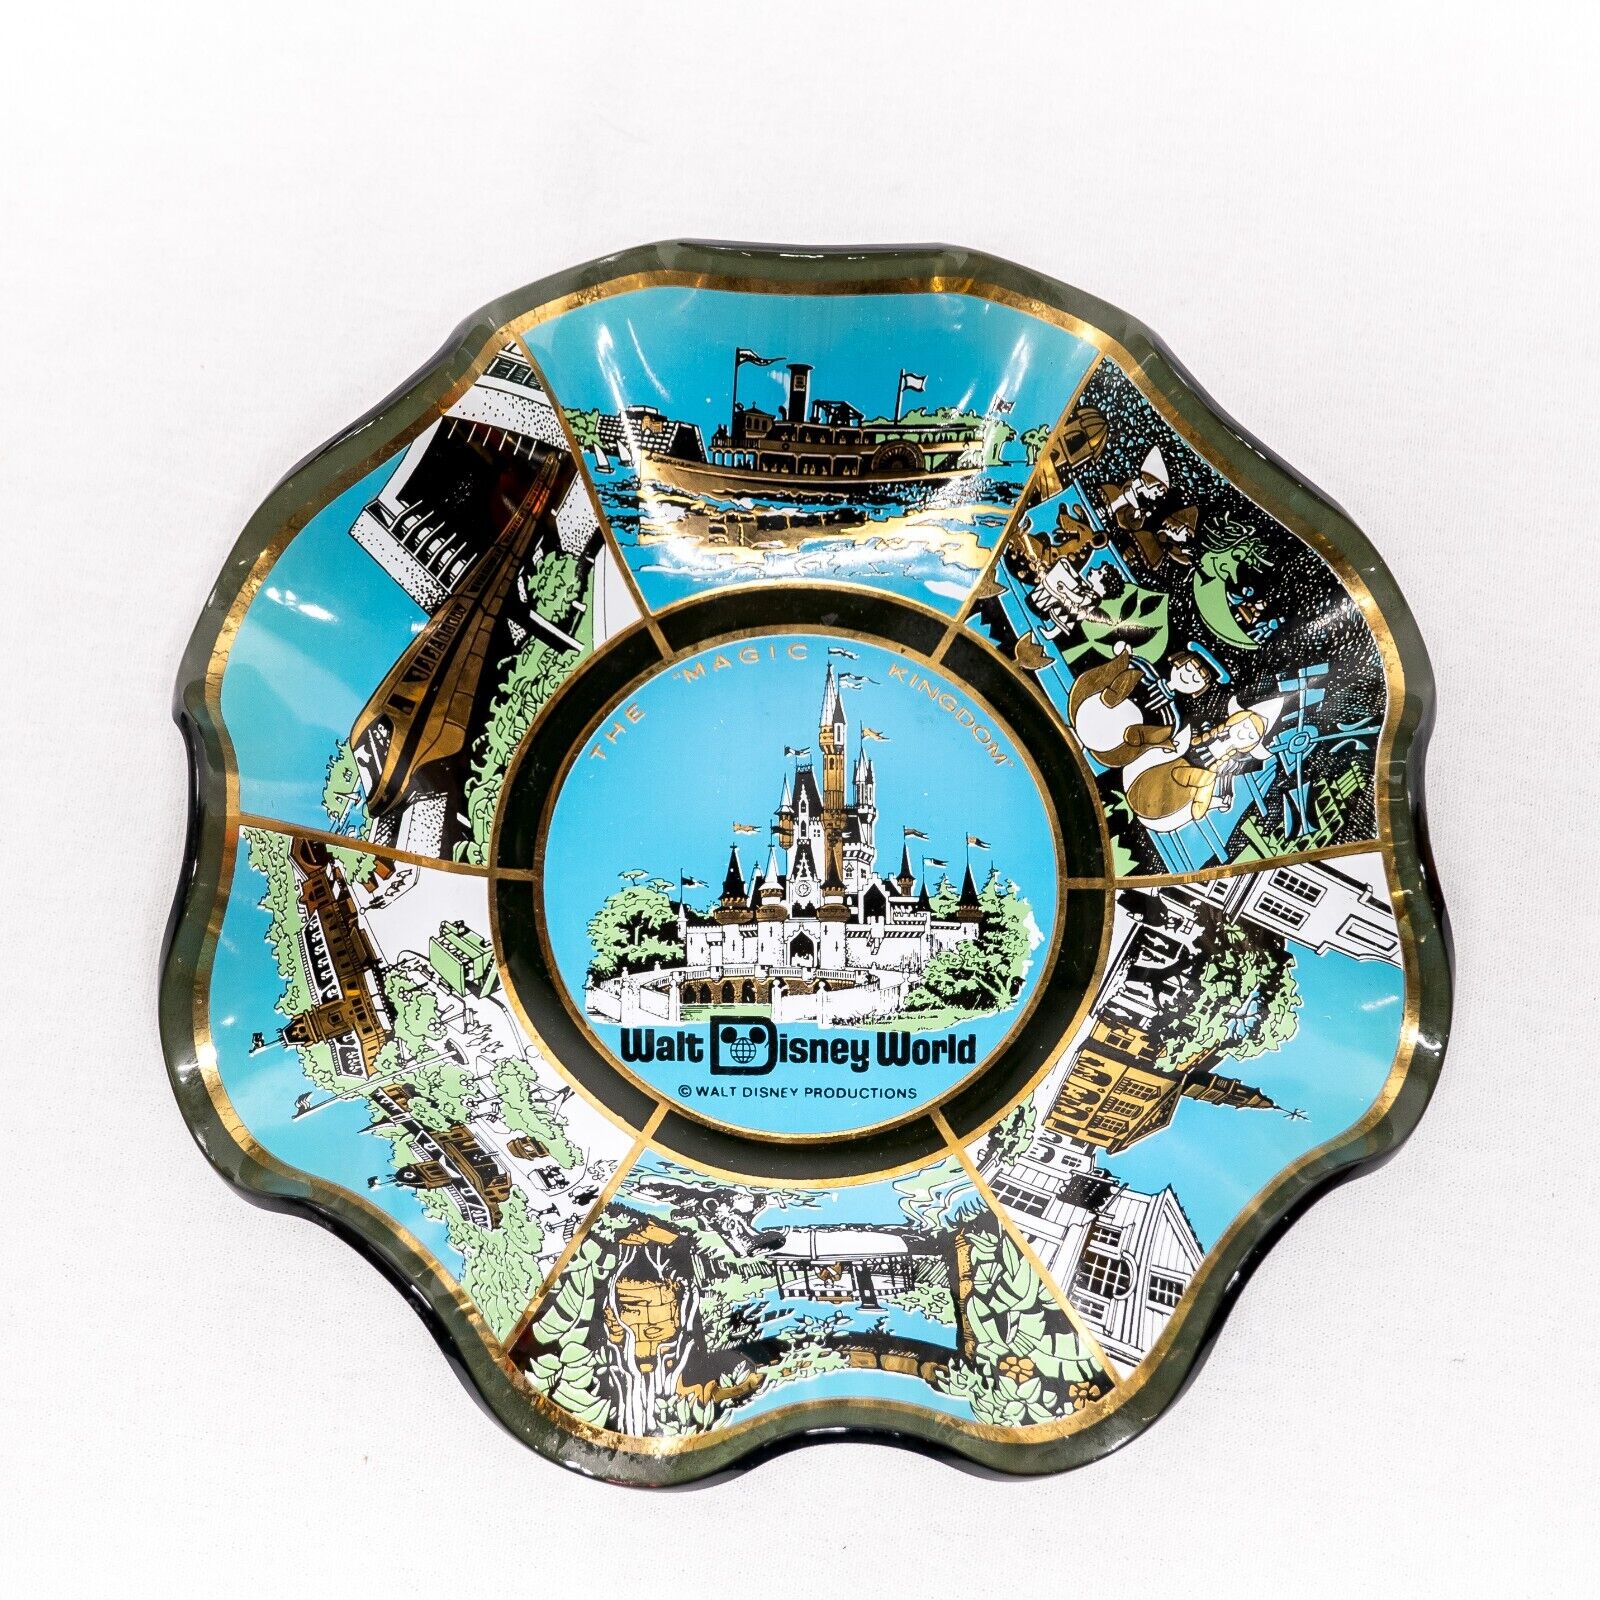 ⭐ Vintage 1970s Walt Disney World Magic Kingdom Castle Glass Dish Bowl Ashtray ⭐